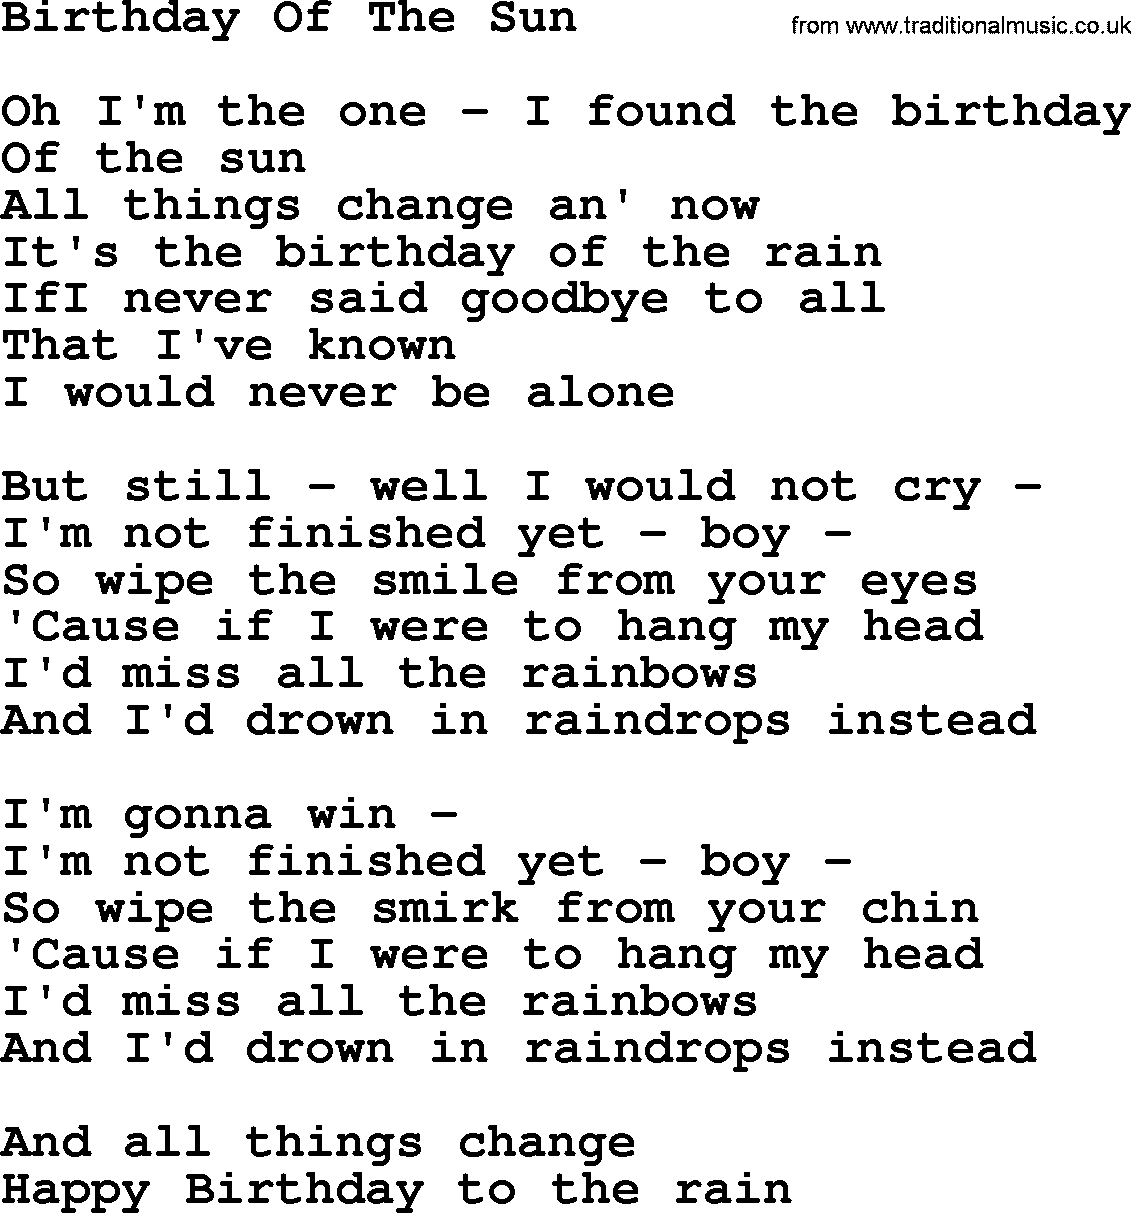 The Byrds song Birthday Of The Sun, lyrics